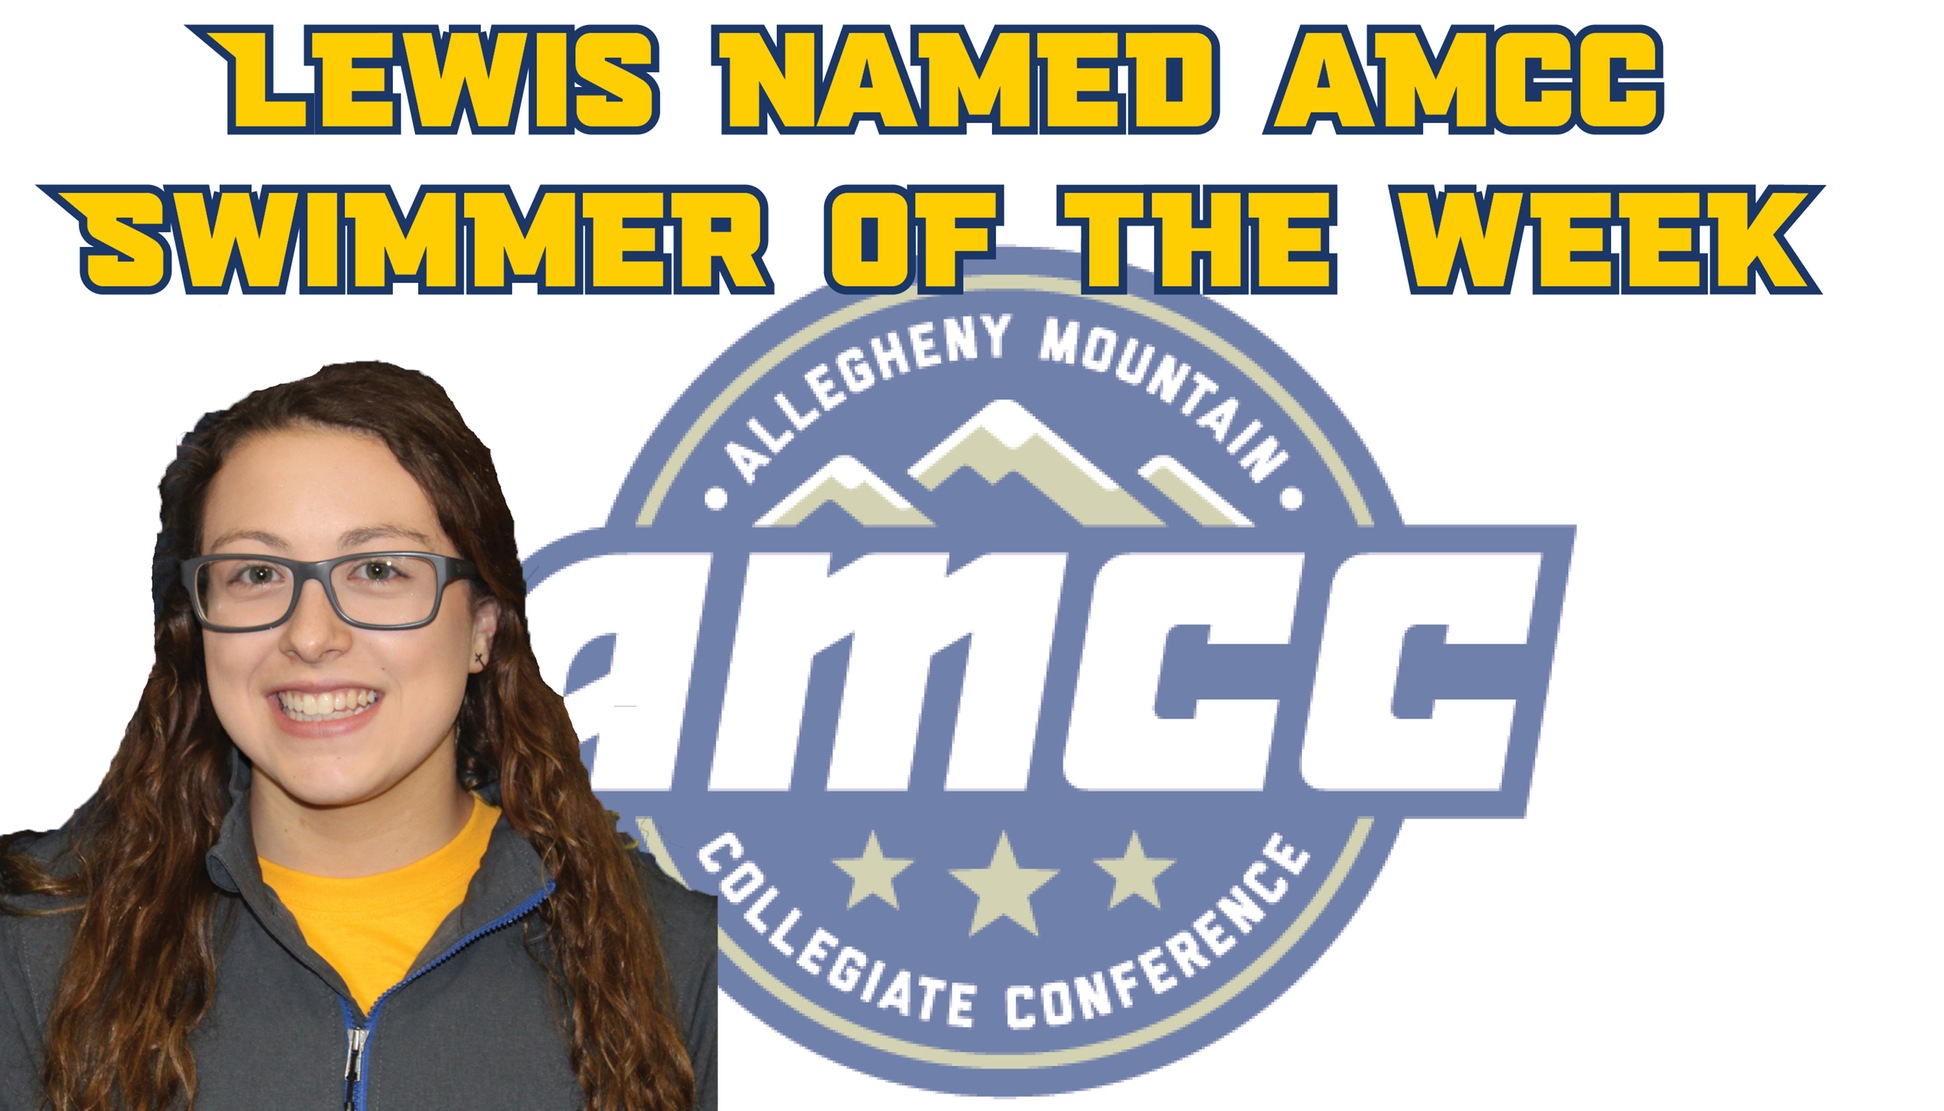 Kathryn Lewis Named AMCC Swimmer of the Week